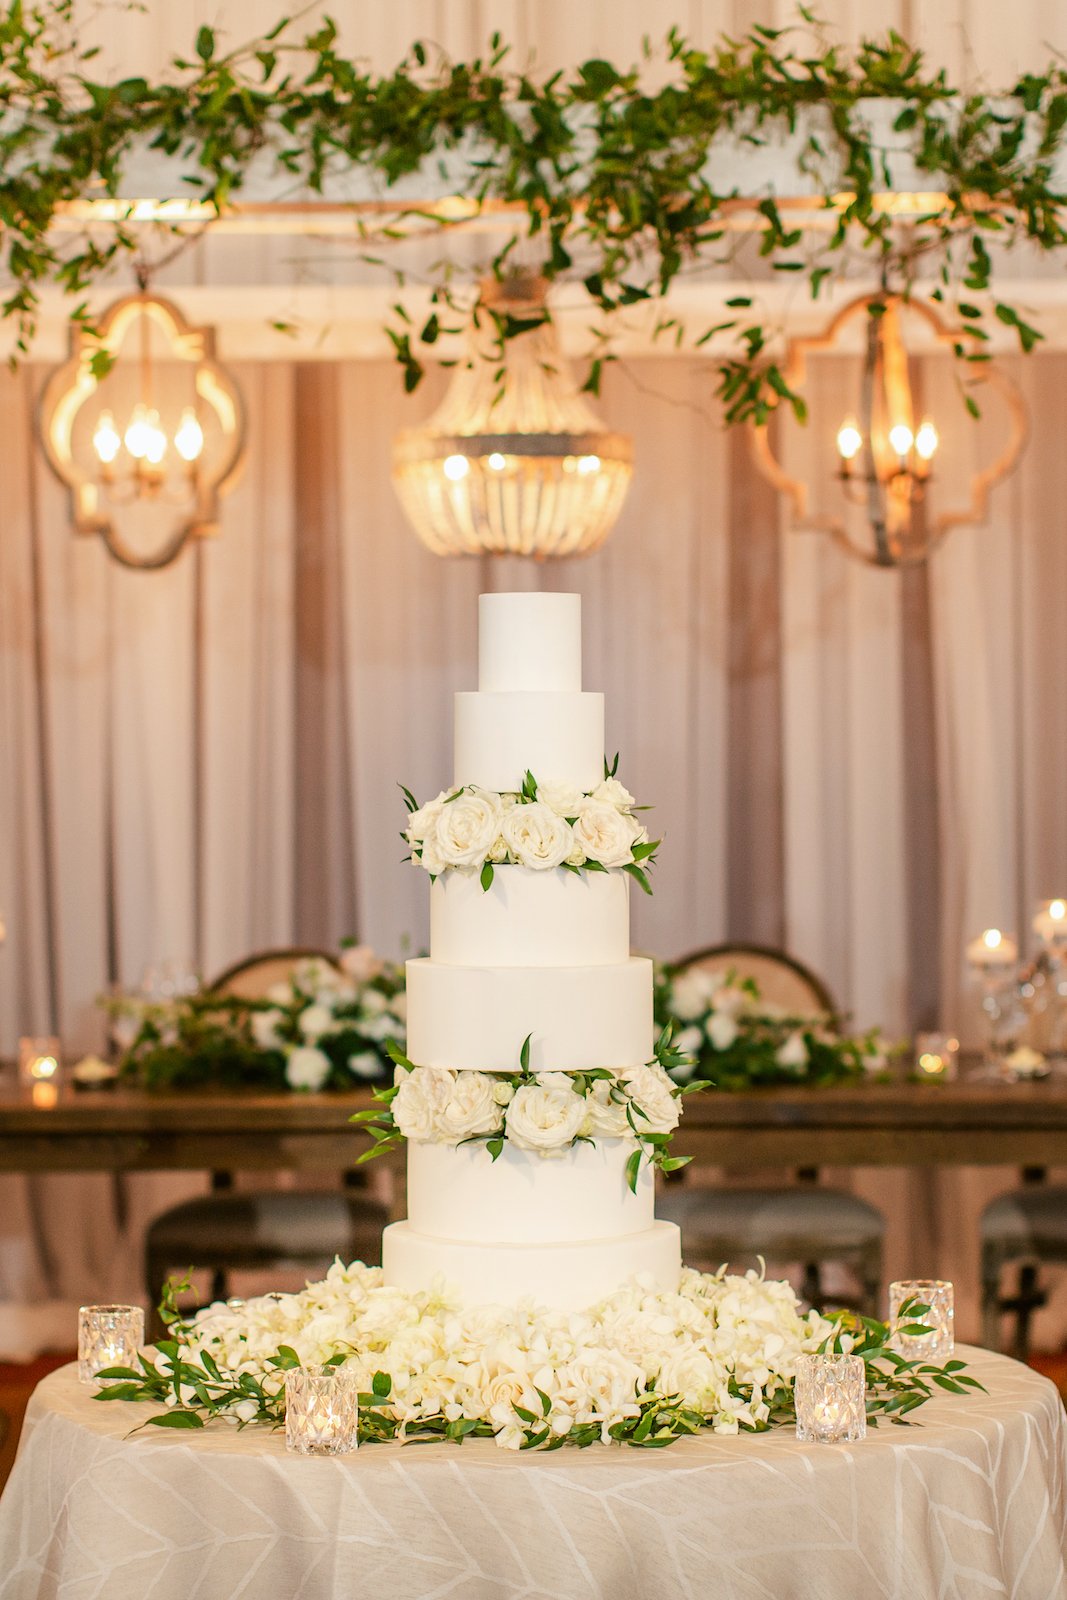 Belli-Fiori-Wedding-Cake-Flowers-1.jpg